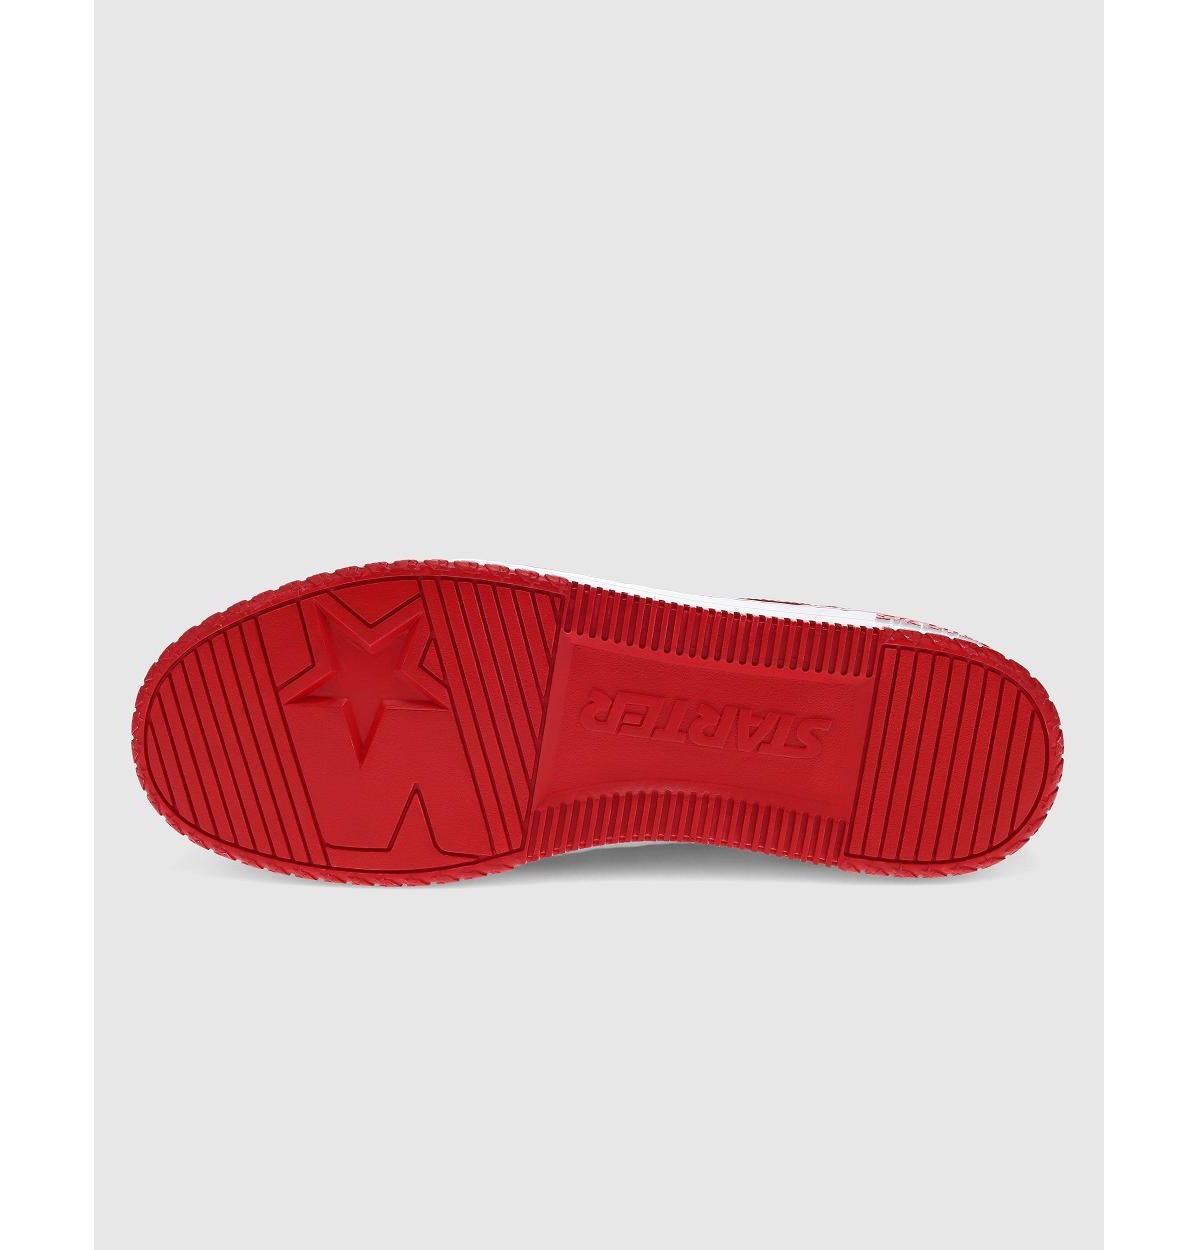 Shop Starter Men's Lfs 1 Tm Sneaker In Red,white